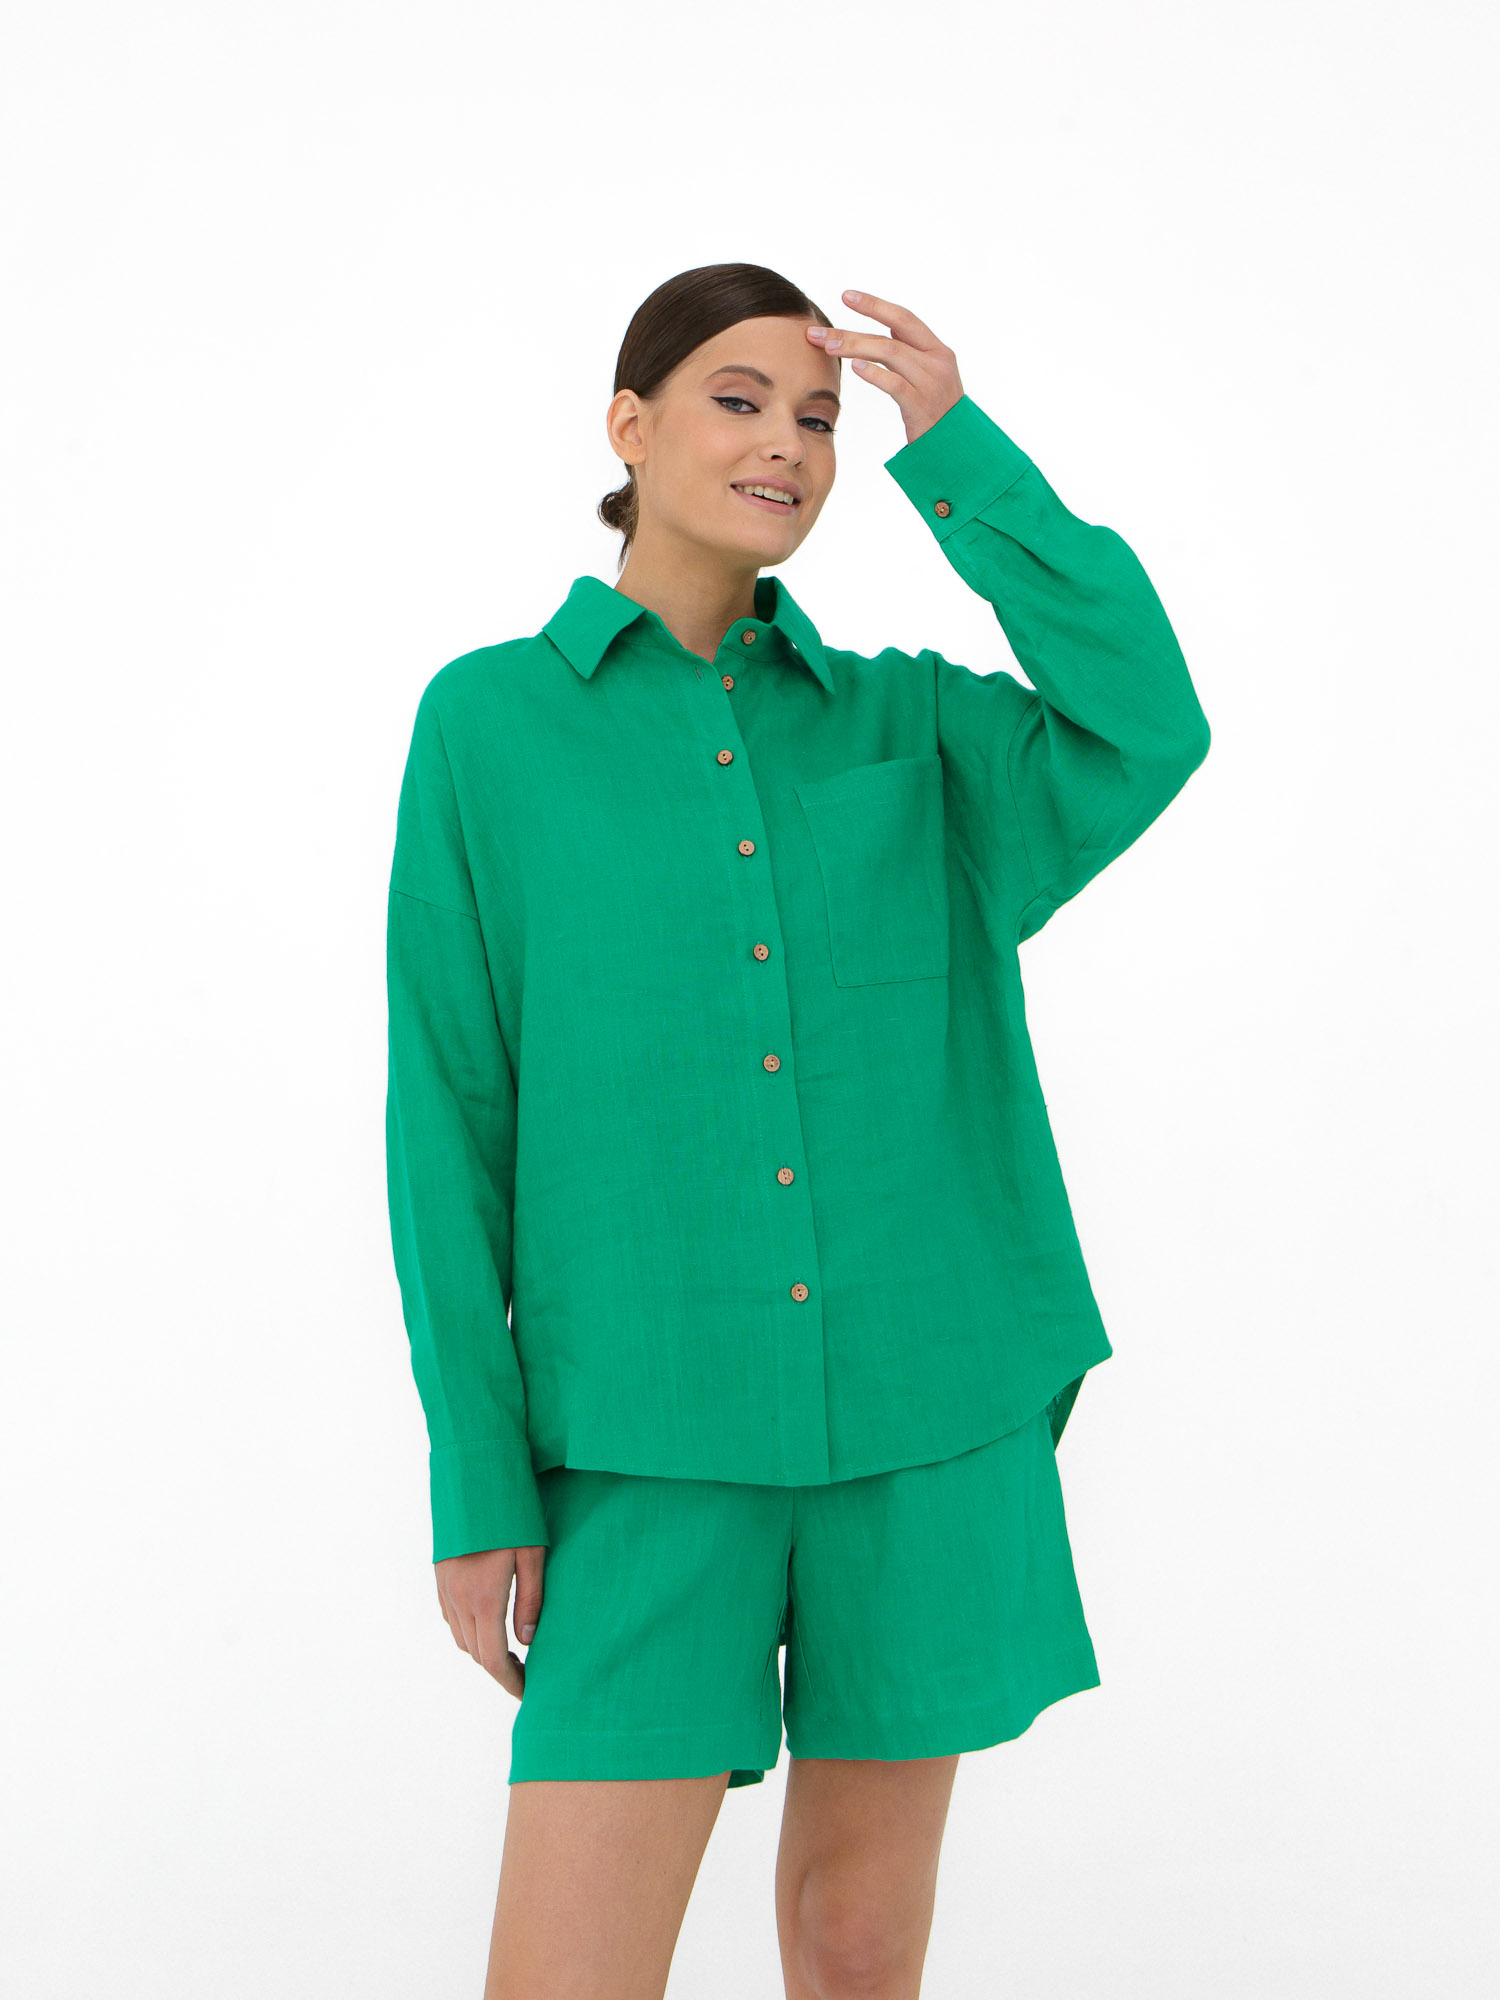 Блузка женская КЛ-7732-ИЛ23 светло-зеленый 44 ELECTRA STYLE, цвет светло-зелёный, размер 44